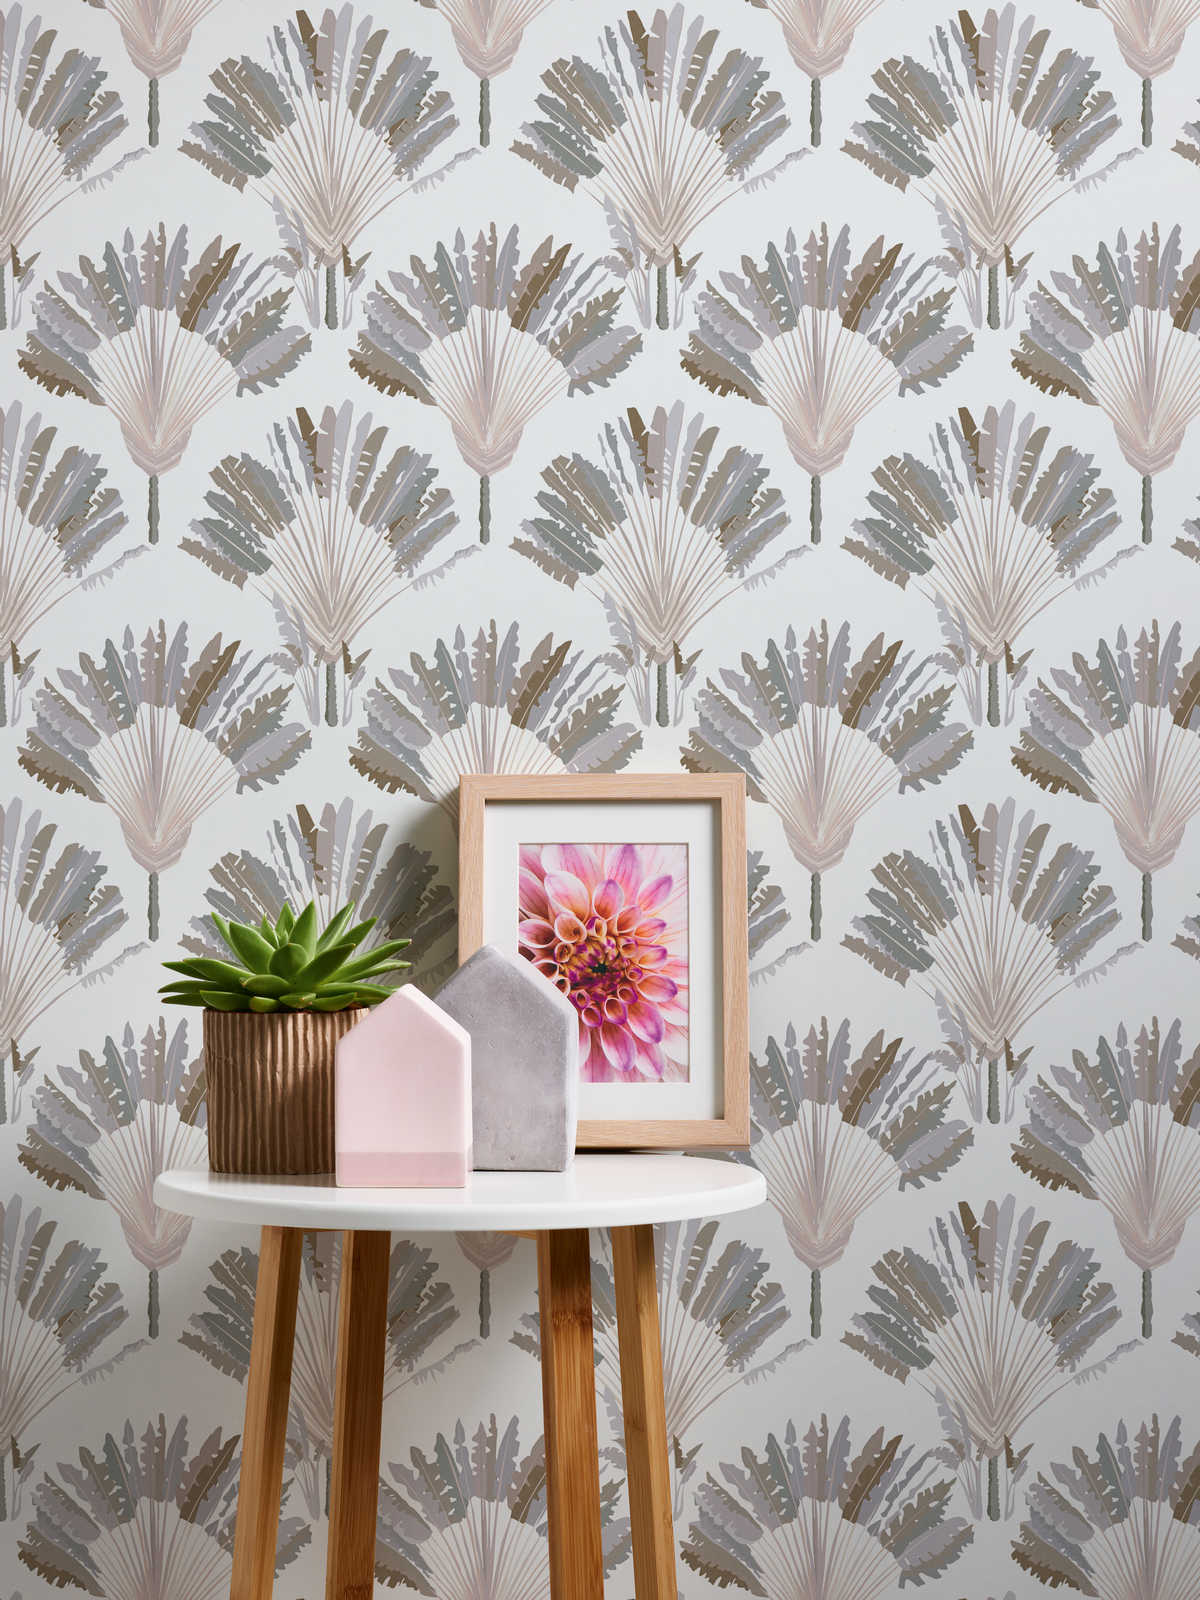             wallpaper grey beige with palm pattern & block design - grey, white, brown
        